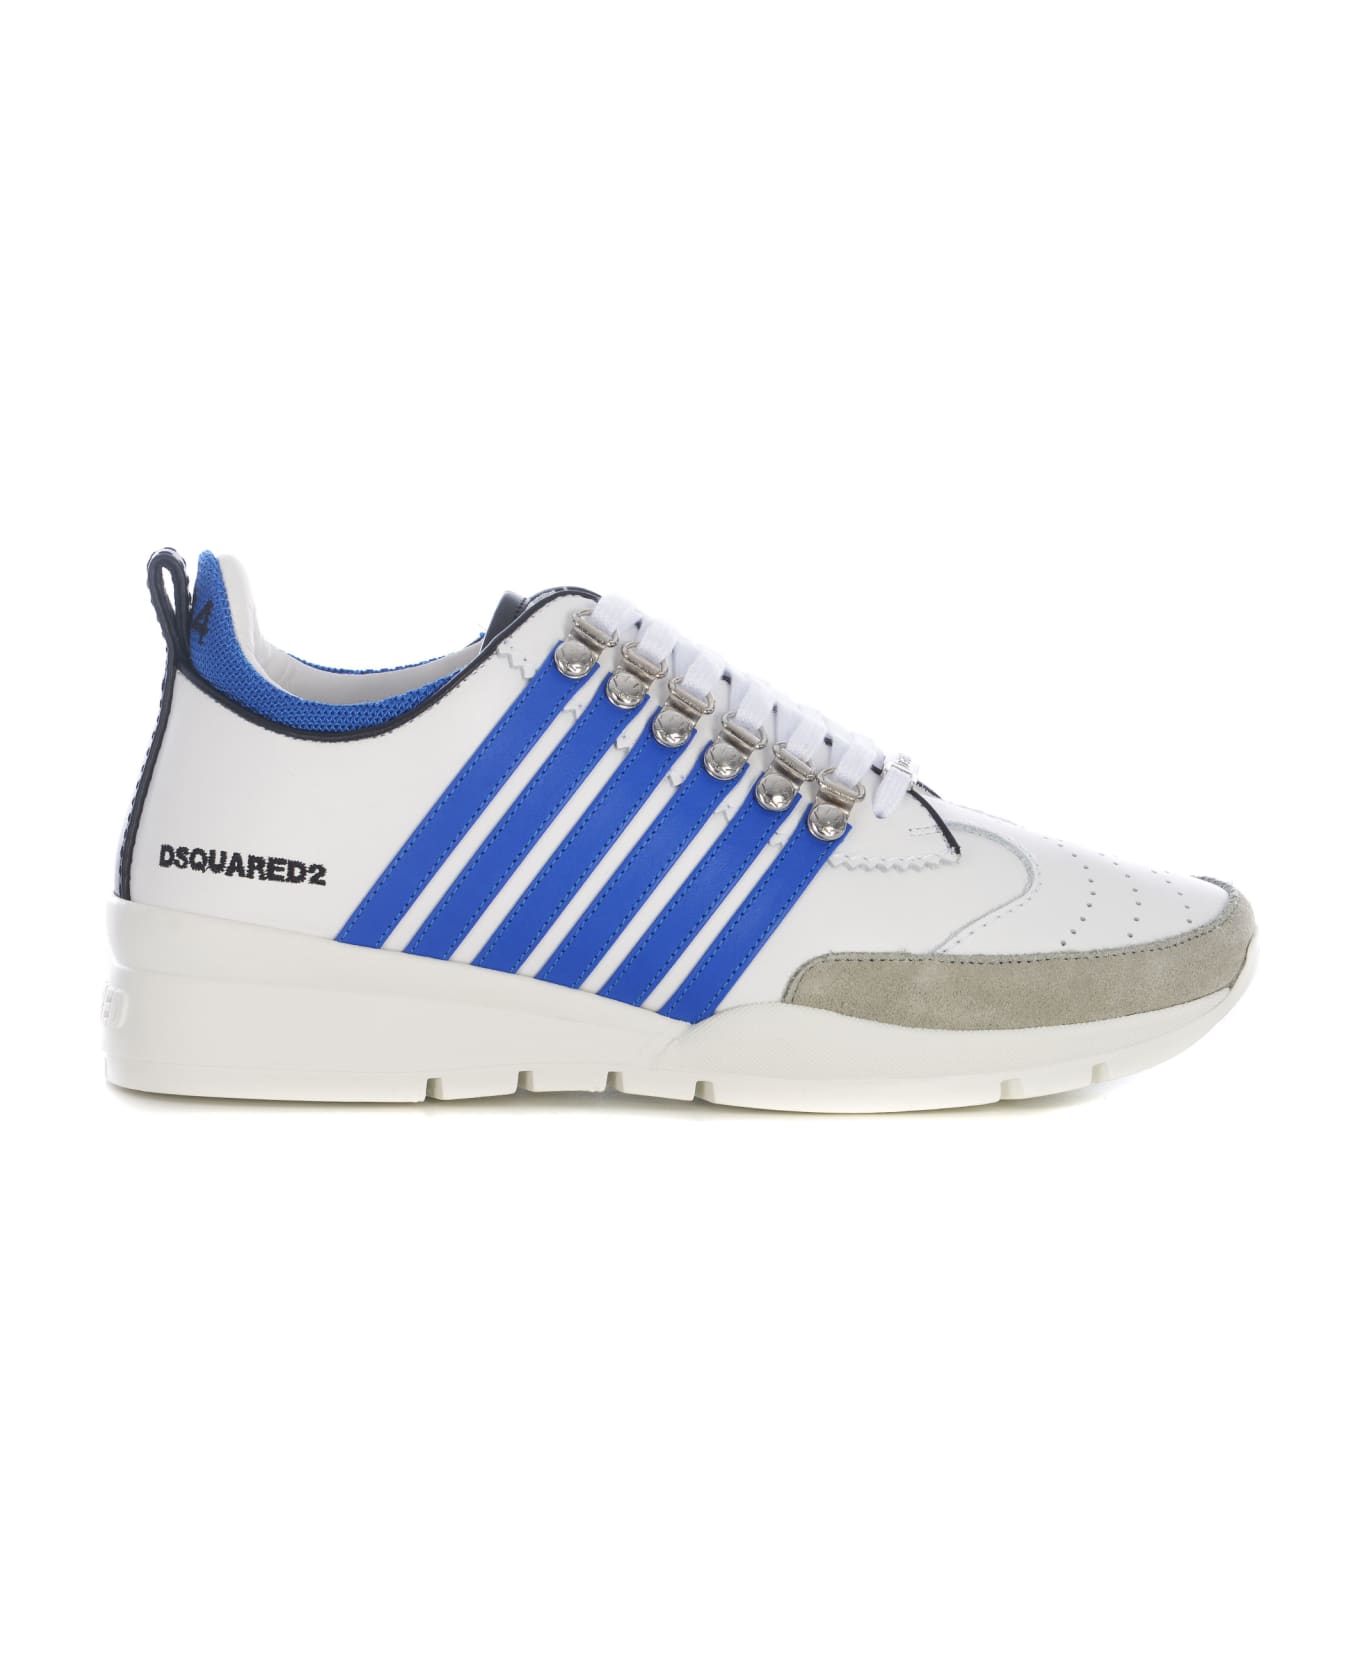 Dsquared2 Legendary Striped Almond Toe Sneakers - Bianco/azzurro スニーカー